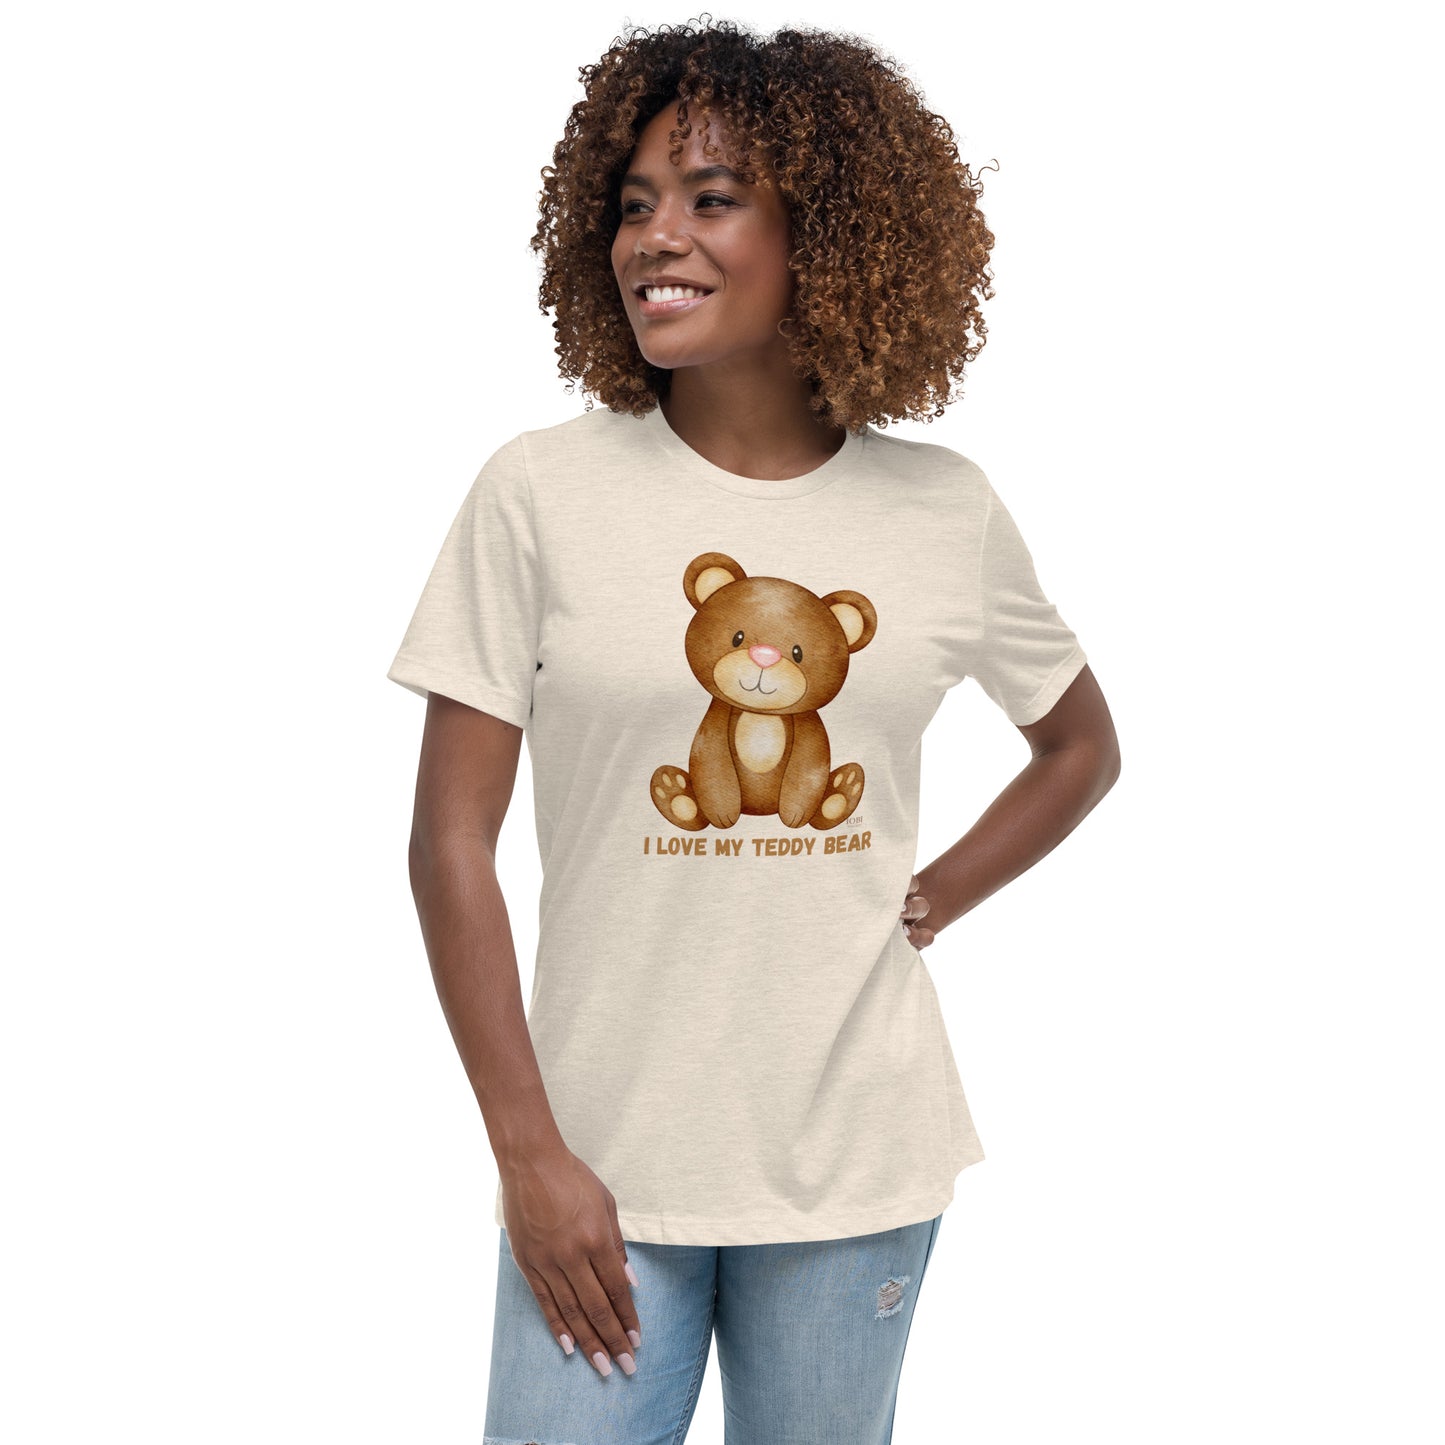 Women's Relaxed Soft & Smooth Premium Quality T-Shirt I Love My Teddy Bear Design by IOBI Original Apparel